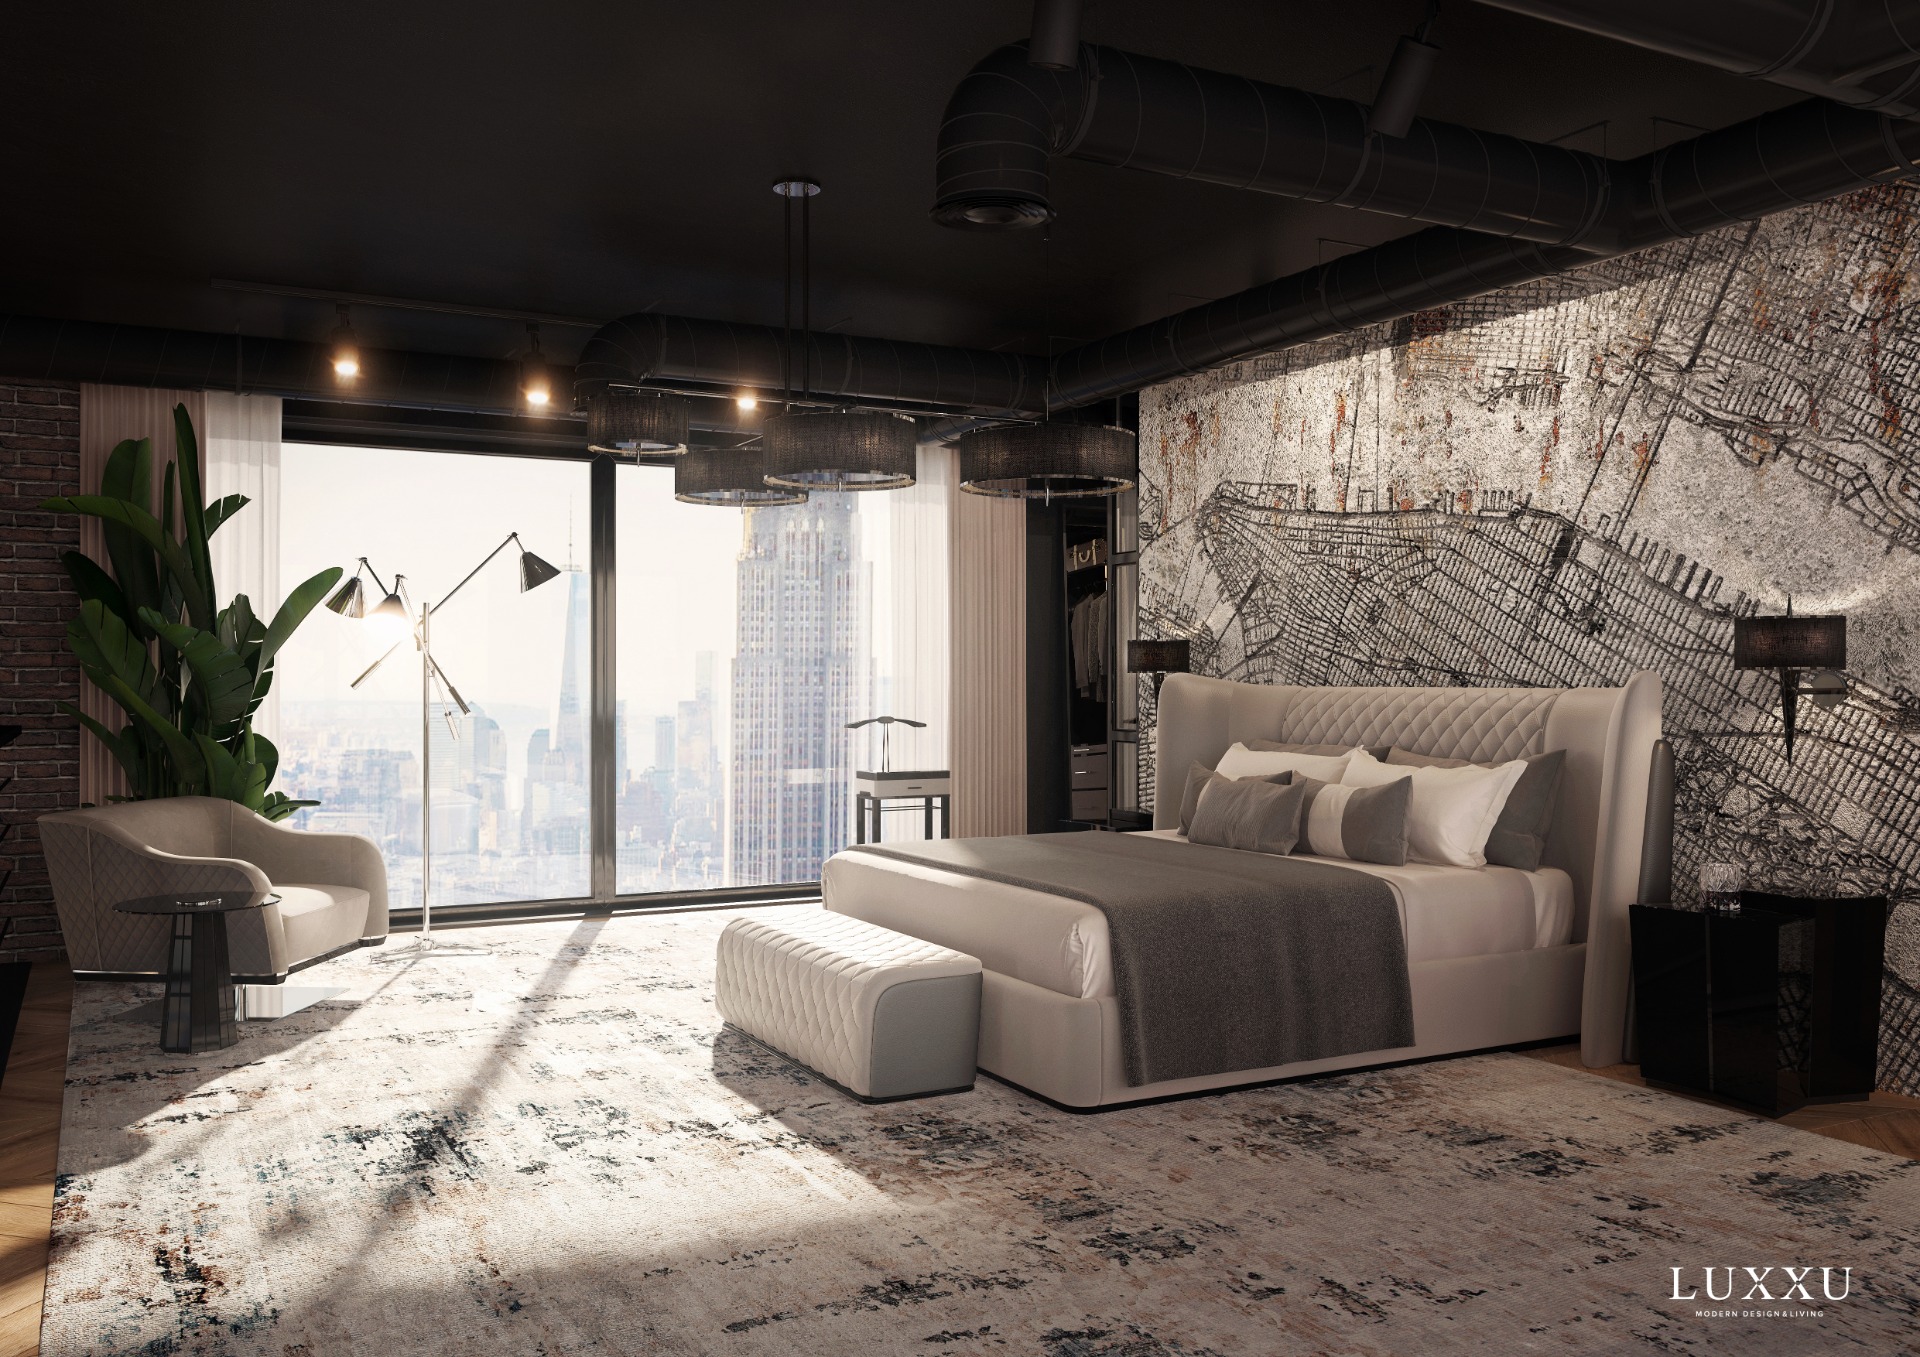 7 luxurious bedroom designs - Contemporary Comfort In The Big Apple